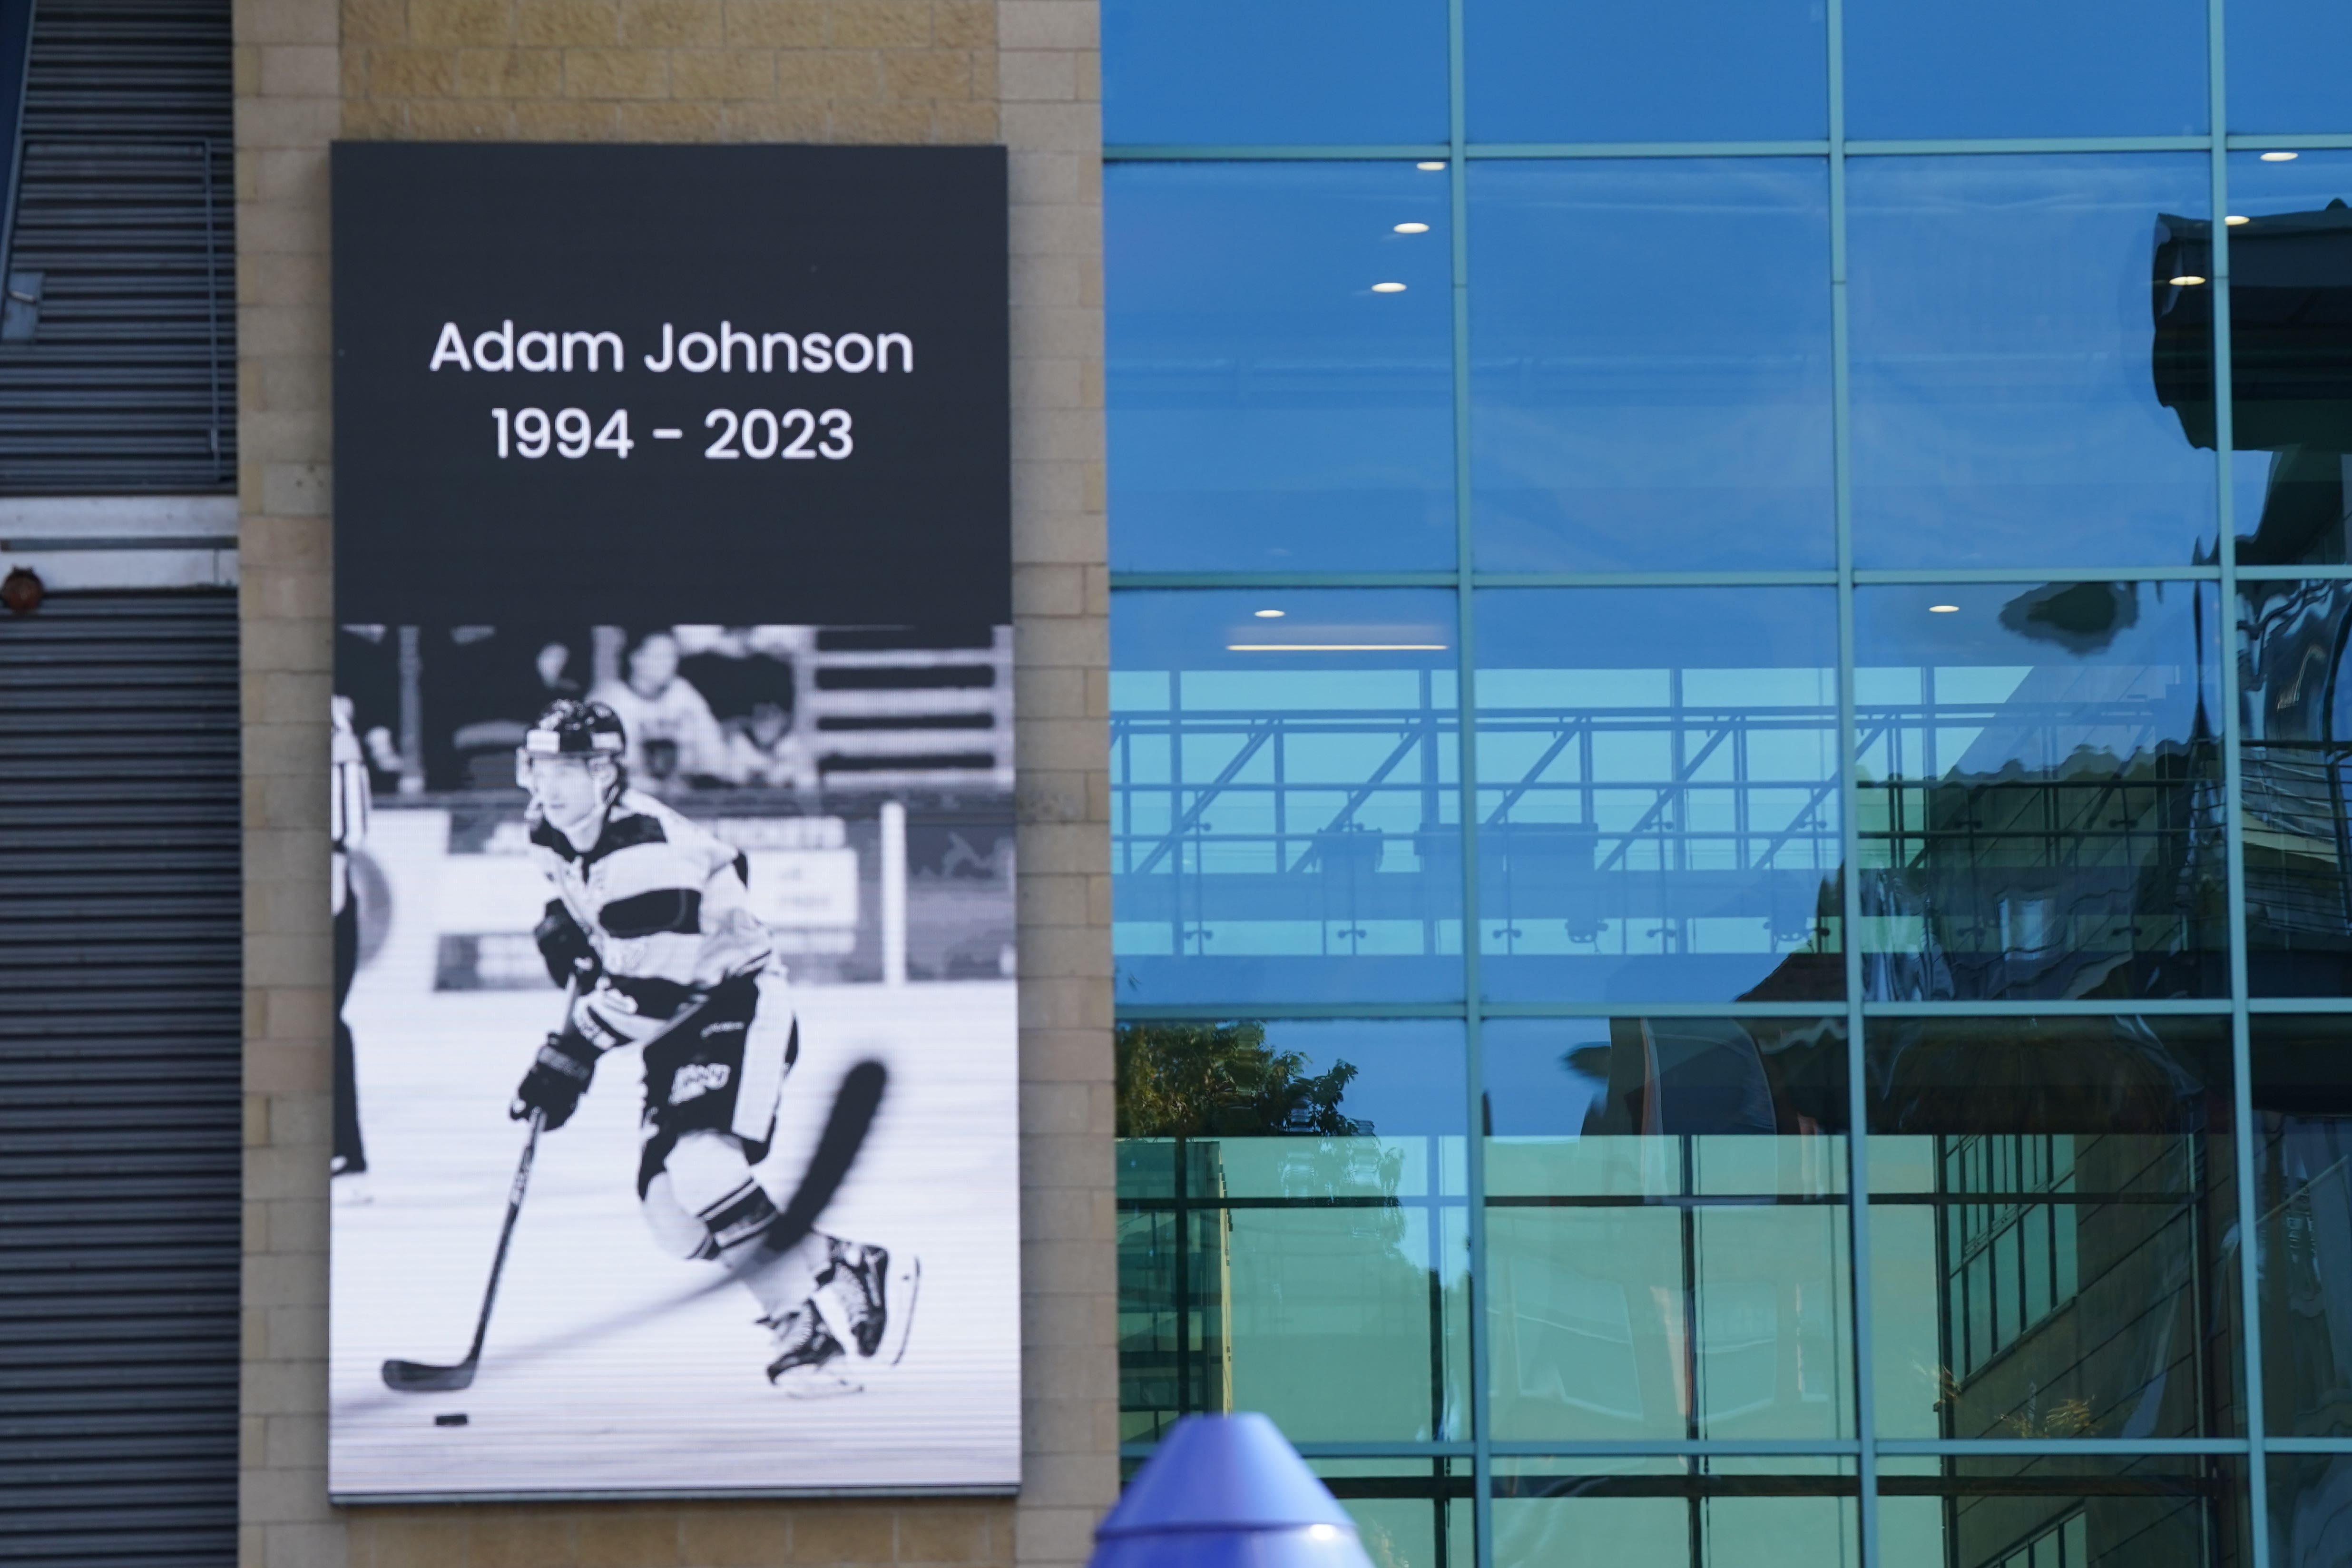 Se han rendido homenajes en el exterior del Motorpoint Arena de Nottingham tras la muerte del jugador de los Panthers